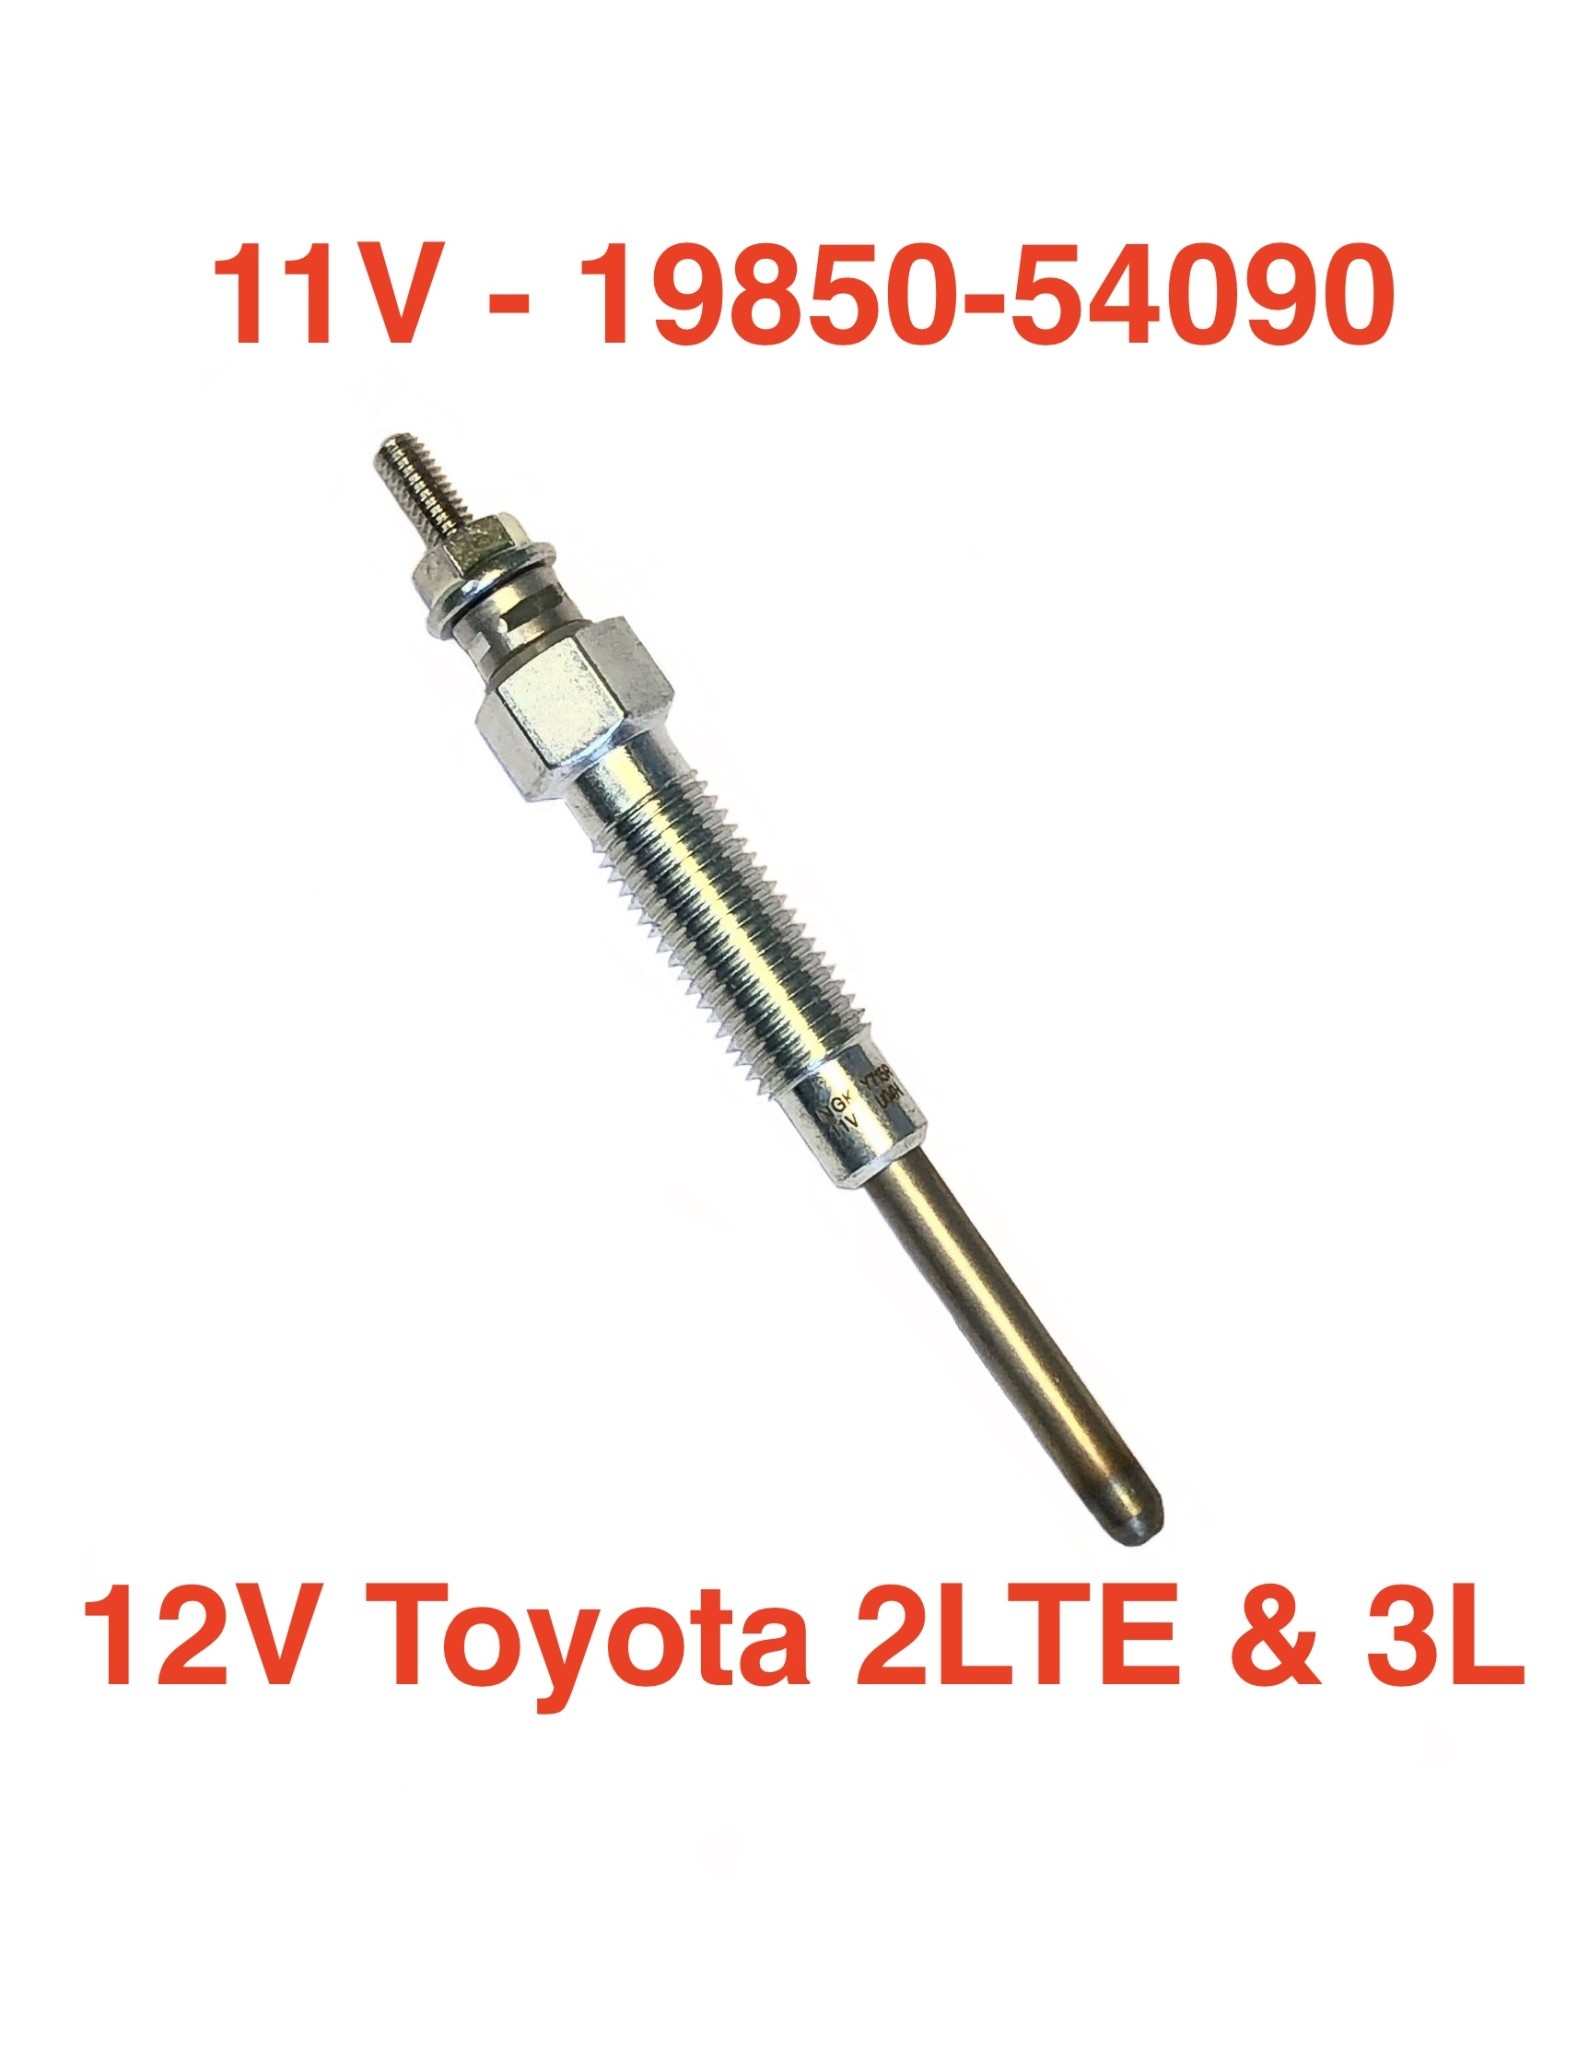 Glow Plug 11V (12V system) - Toyota Land Cruiser Prado LJ71, LJ78, Hilux LN Surf w/2LTE, 3L - 19850-54090